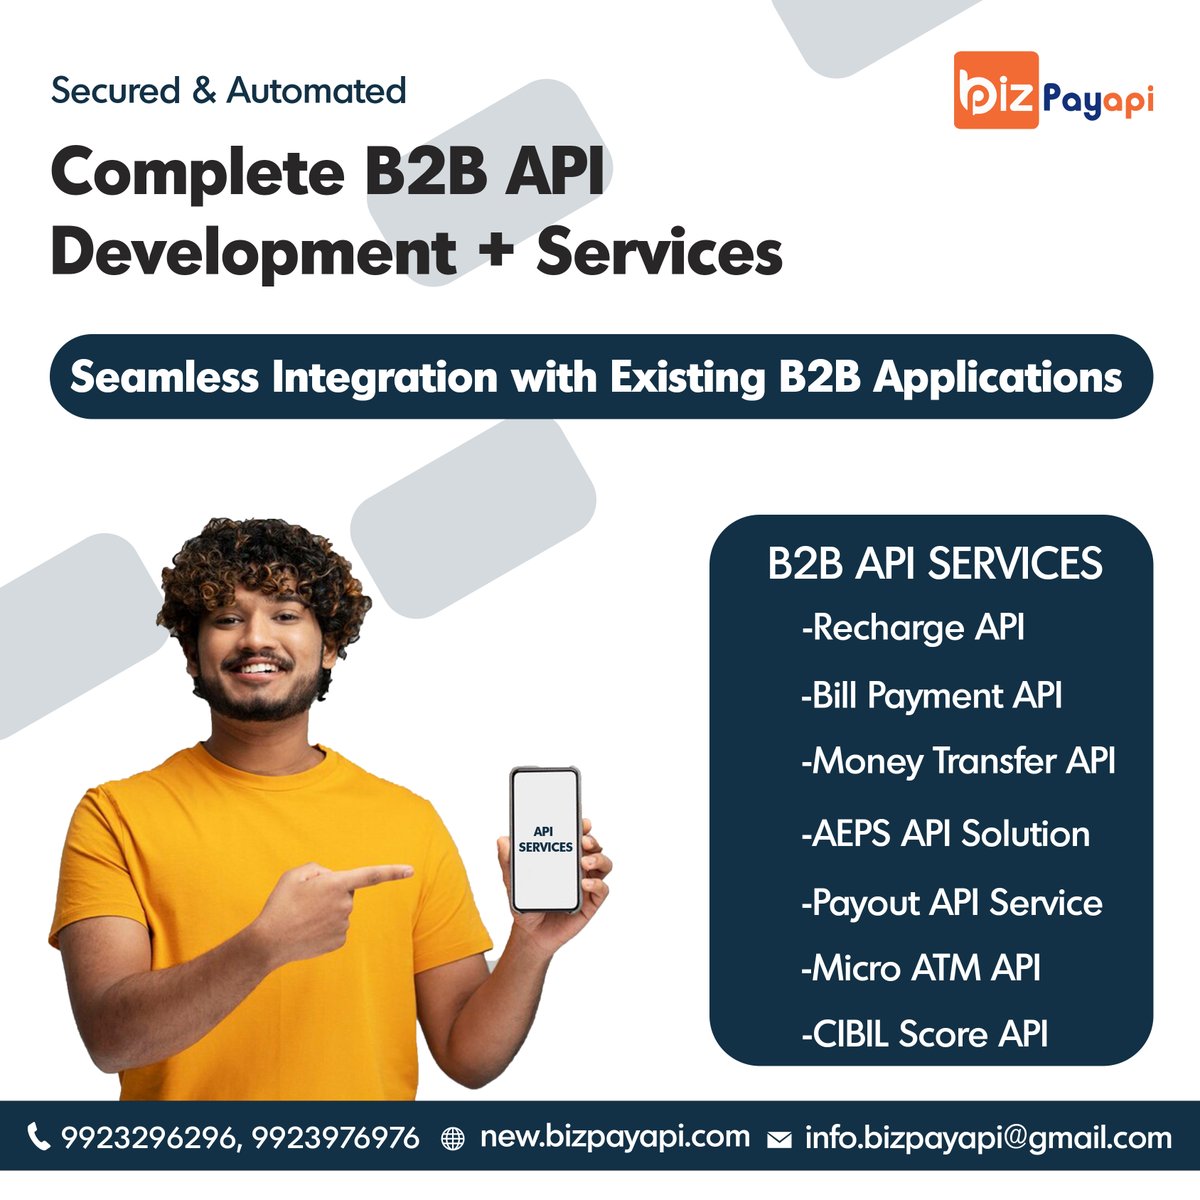 Complete B2B API Development Services.
.
.
.
.
.
.
. 

#rechargeapi #billpayments #moneytransfer #aepsapi #payoutapi #microatmapi #CIBIL